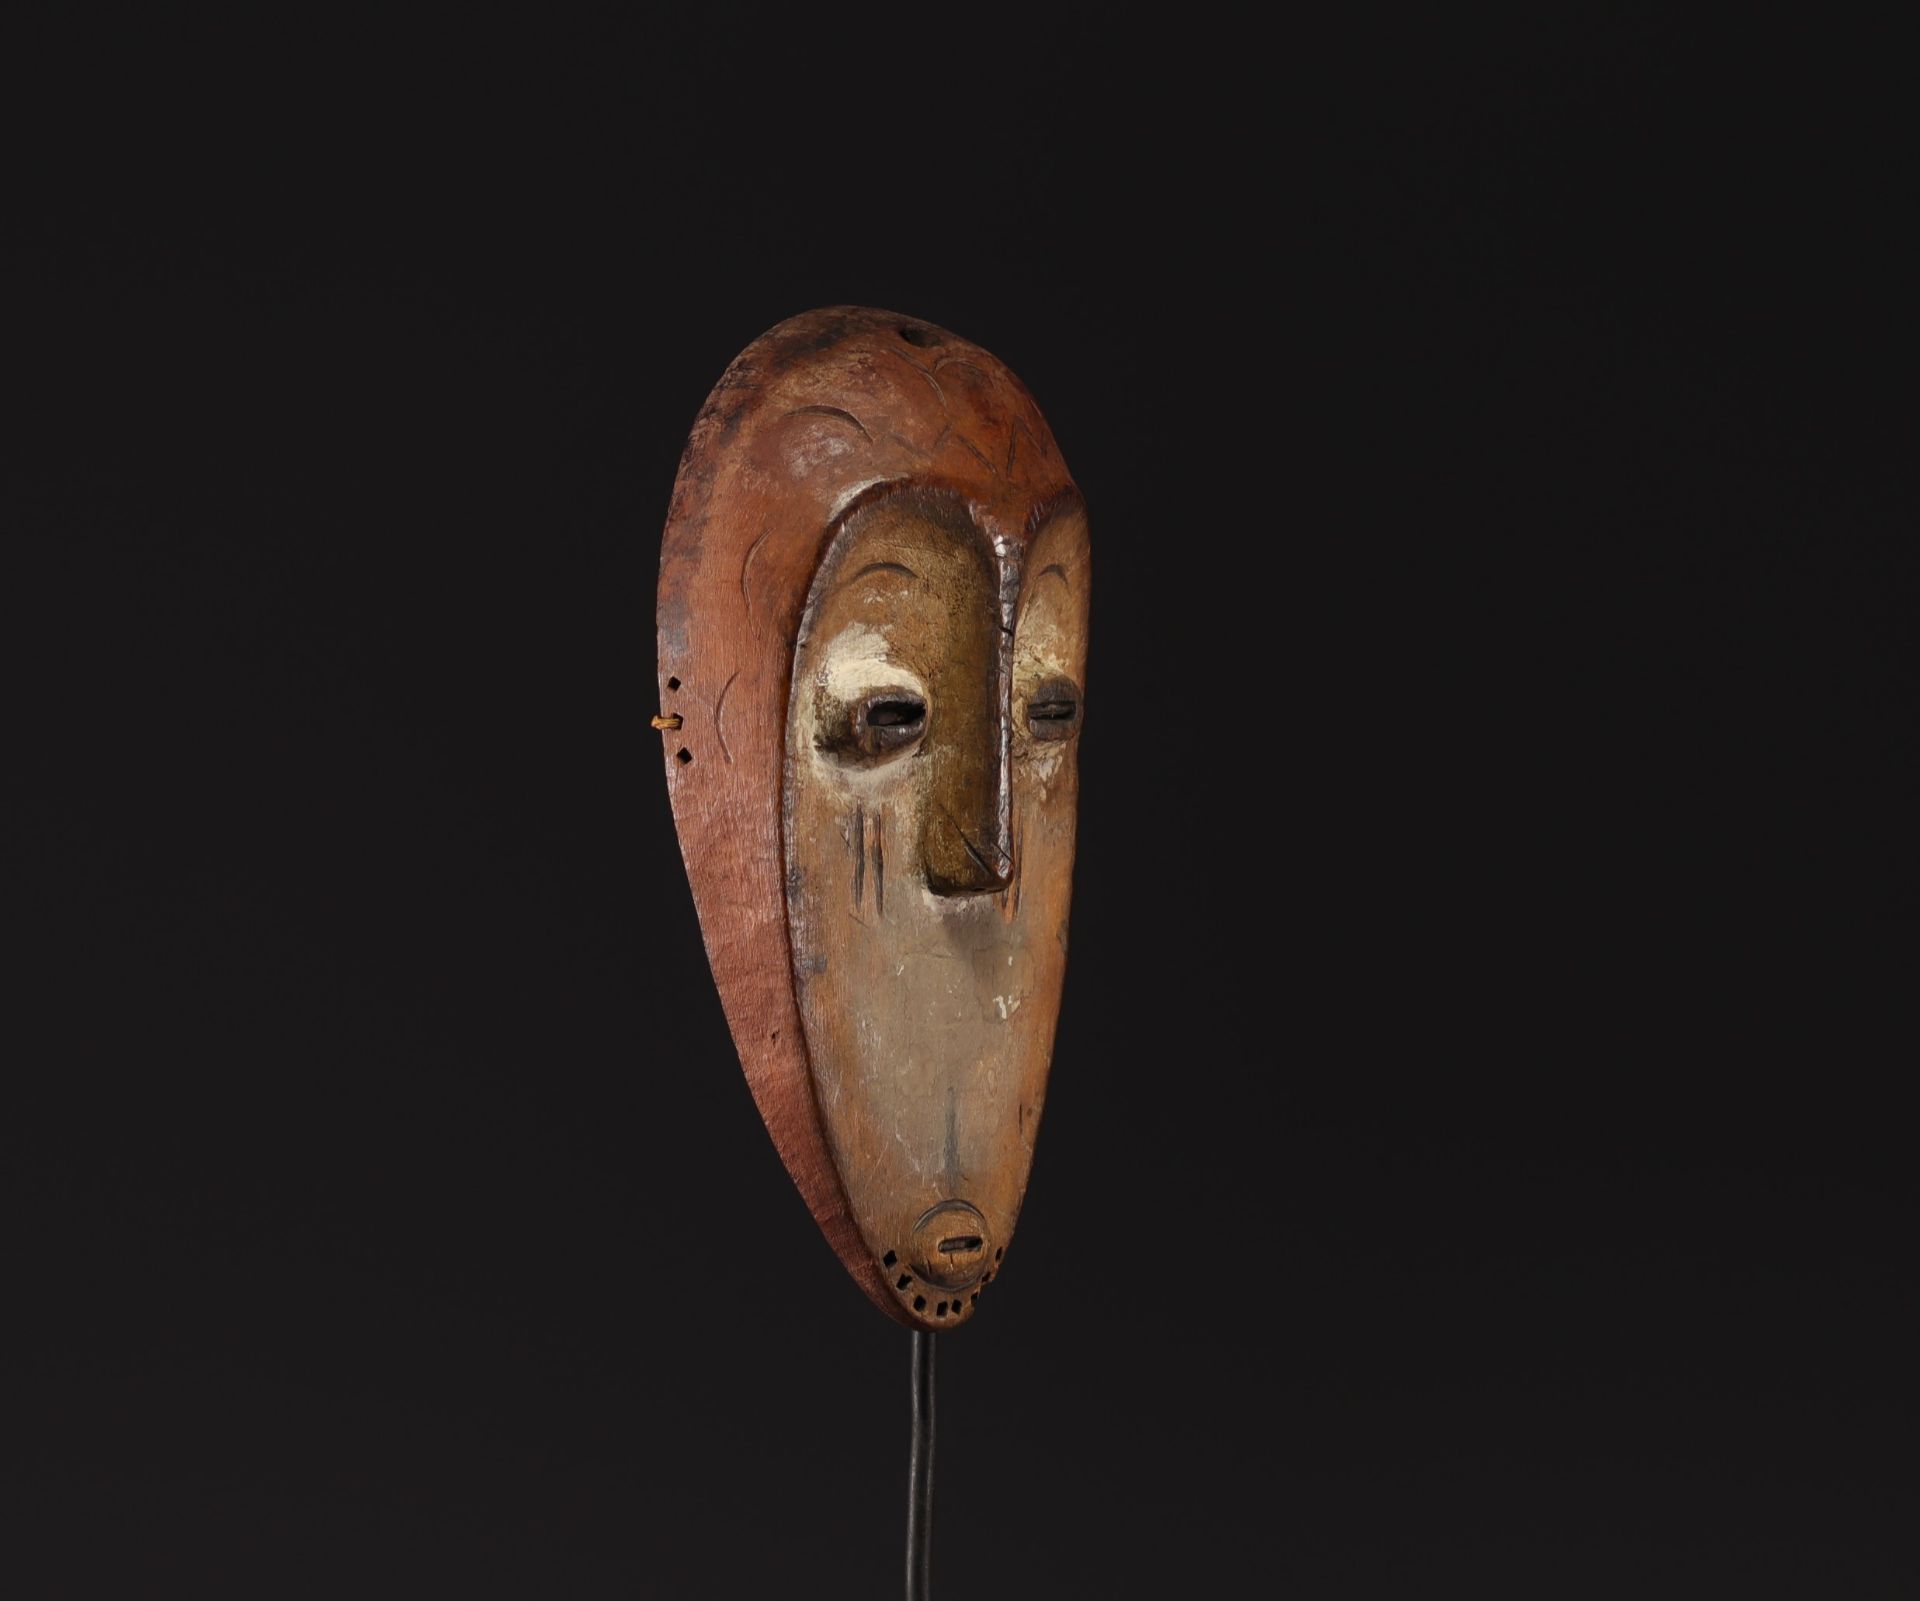 Lega Mask - Rep.Dem.Congo - Image 2 of 4